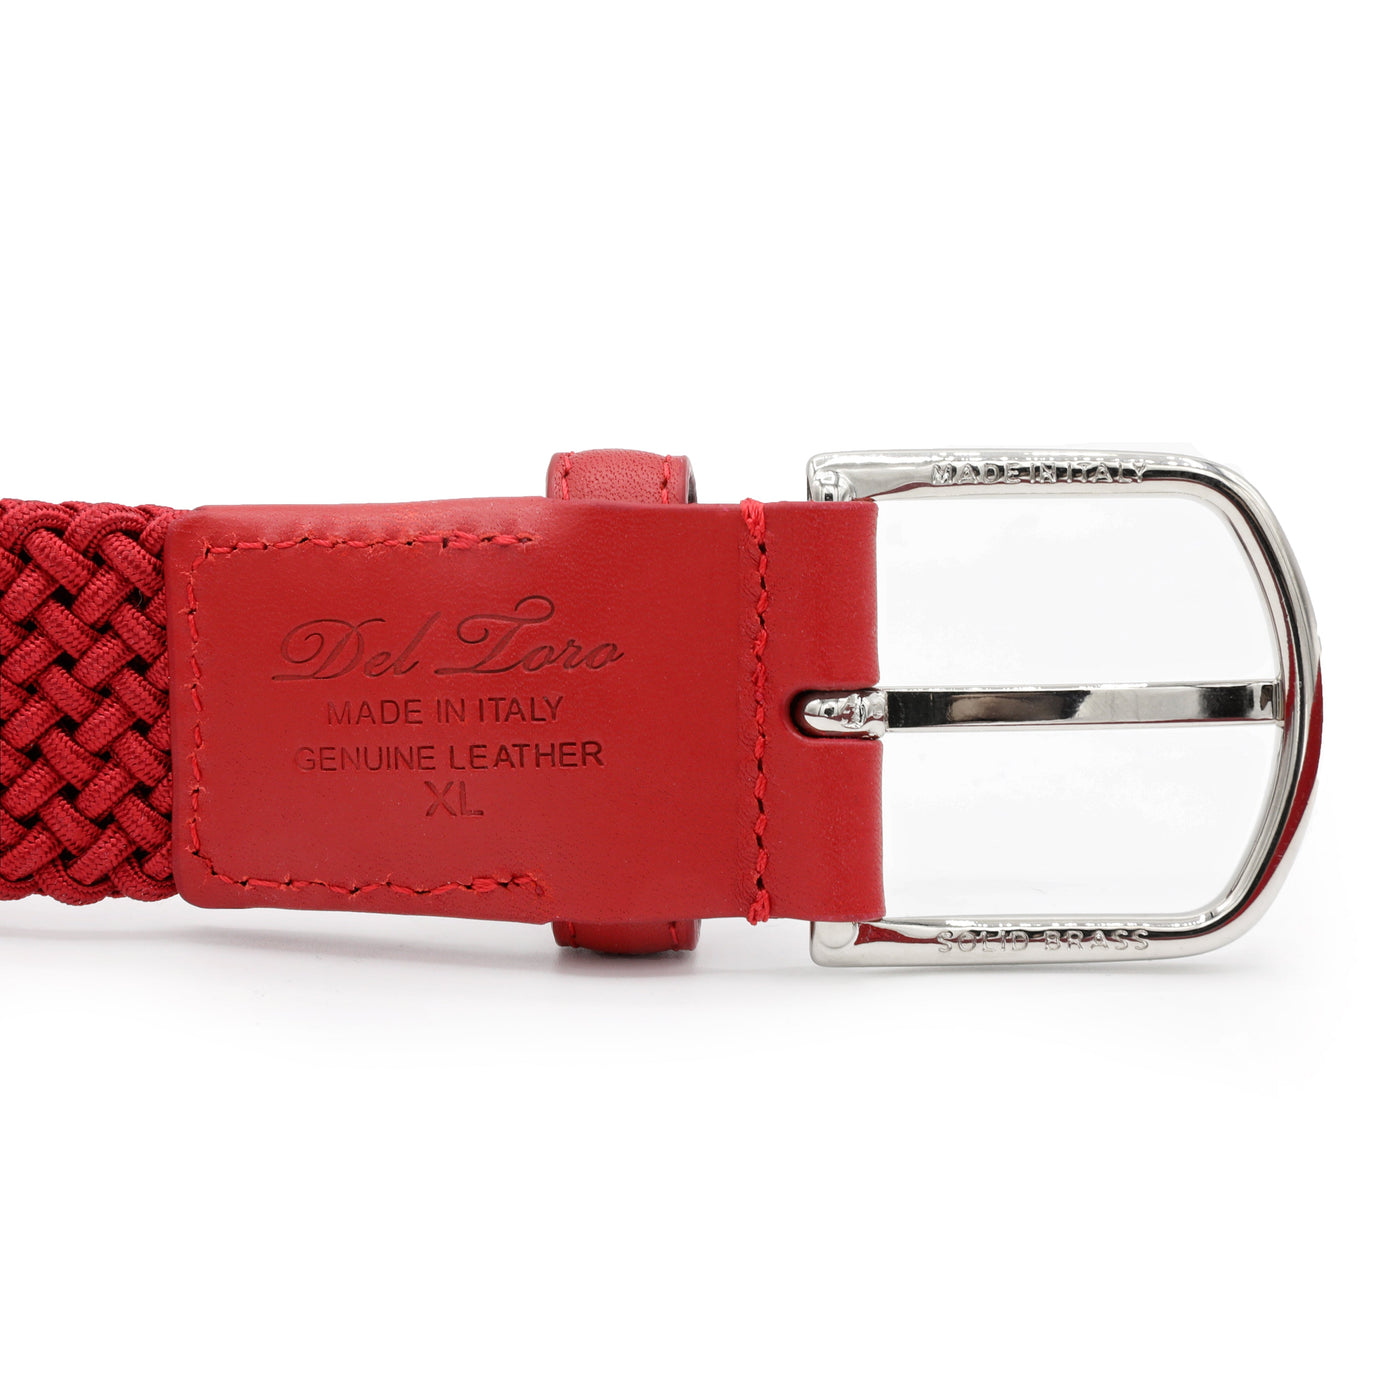 Men's Red Woven Elastic Belt by Del Toro Shoes